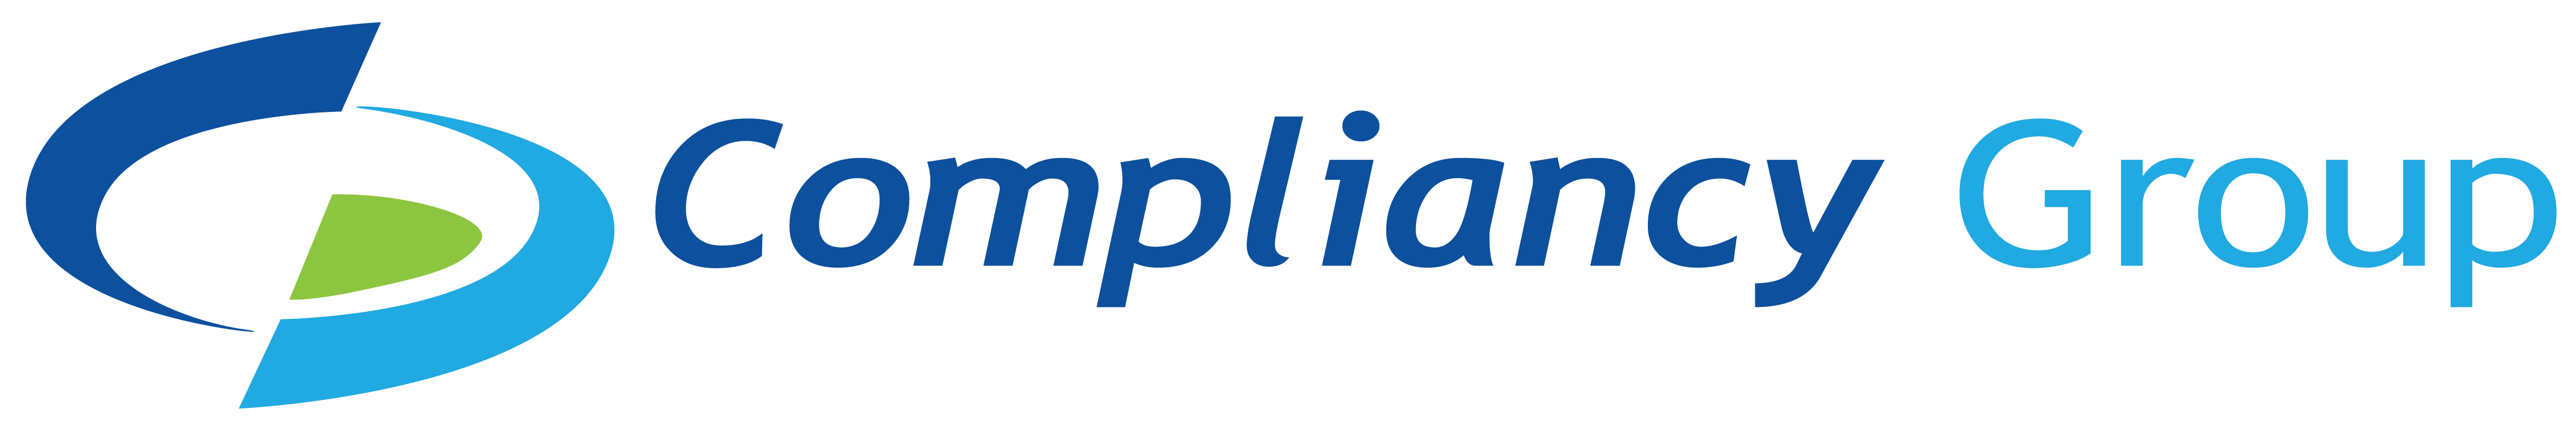 Compliancy Group LLC logo